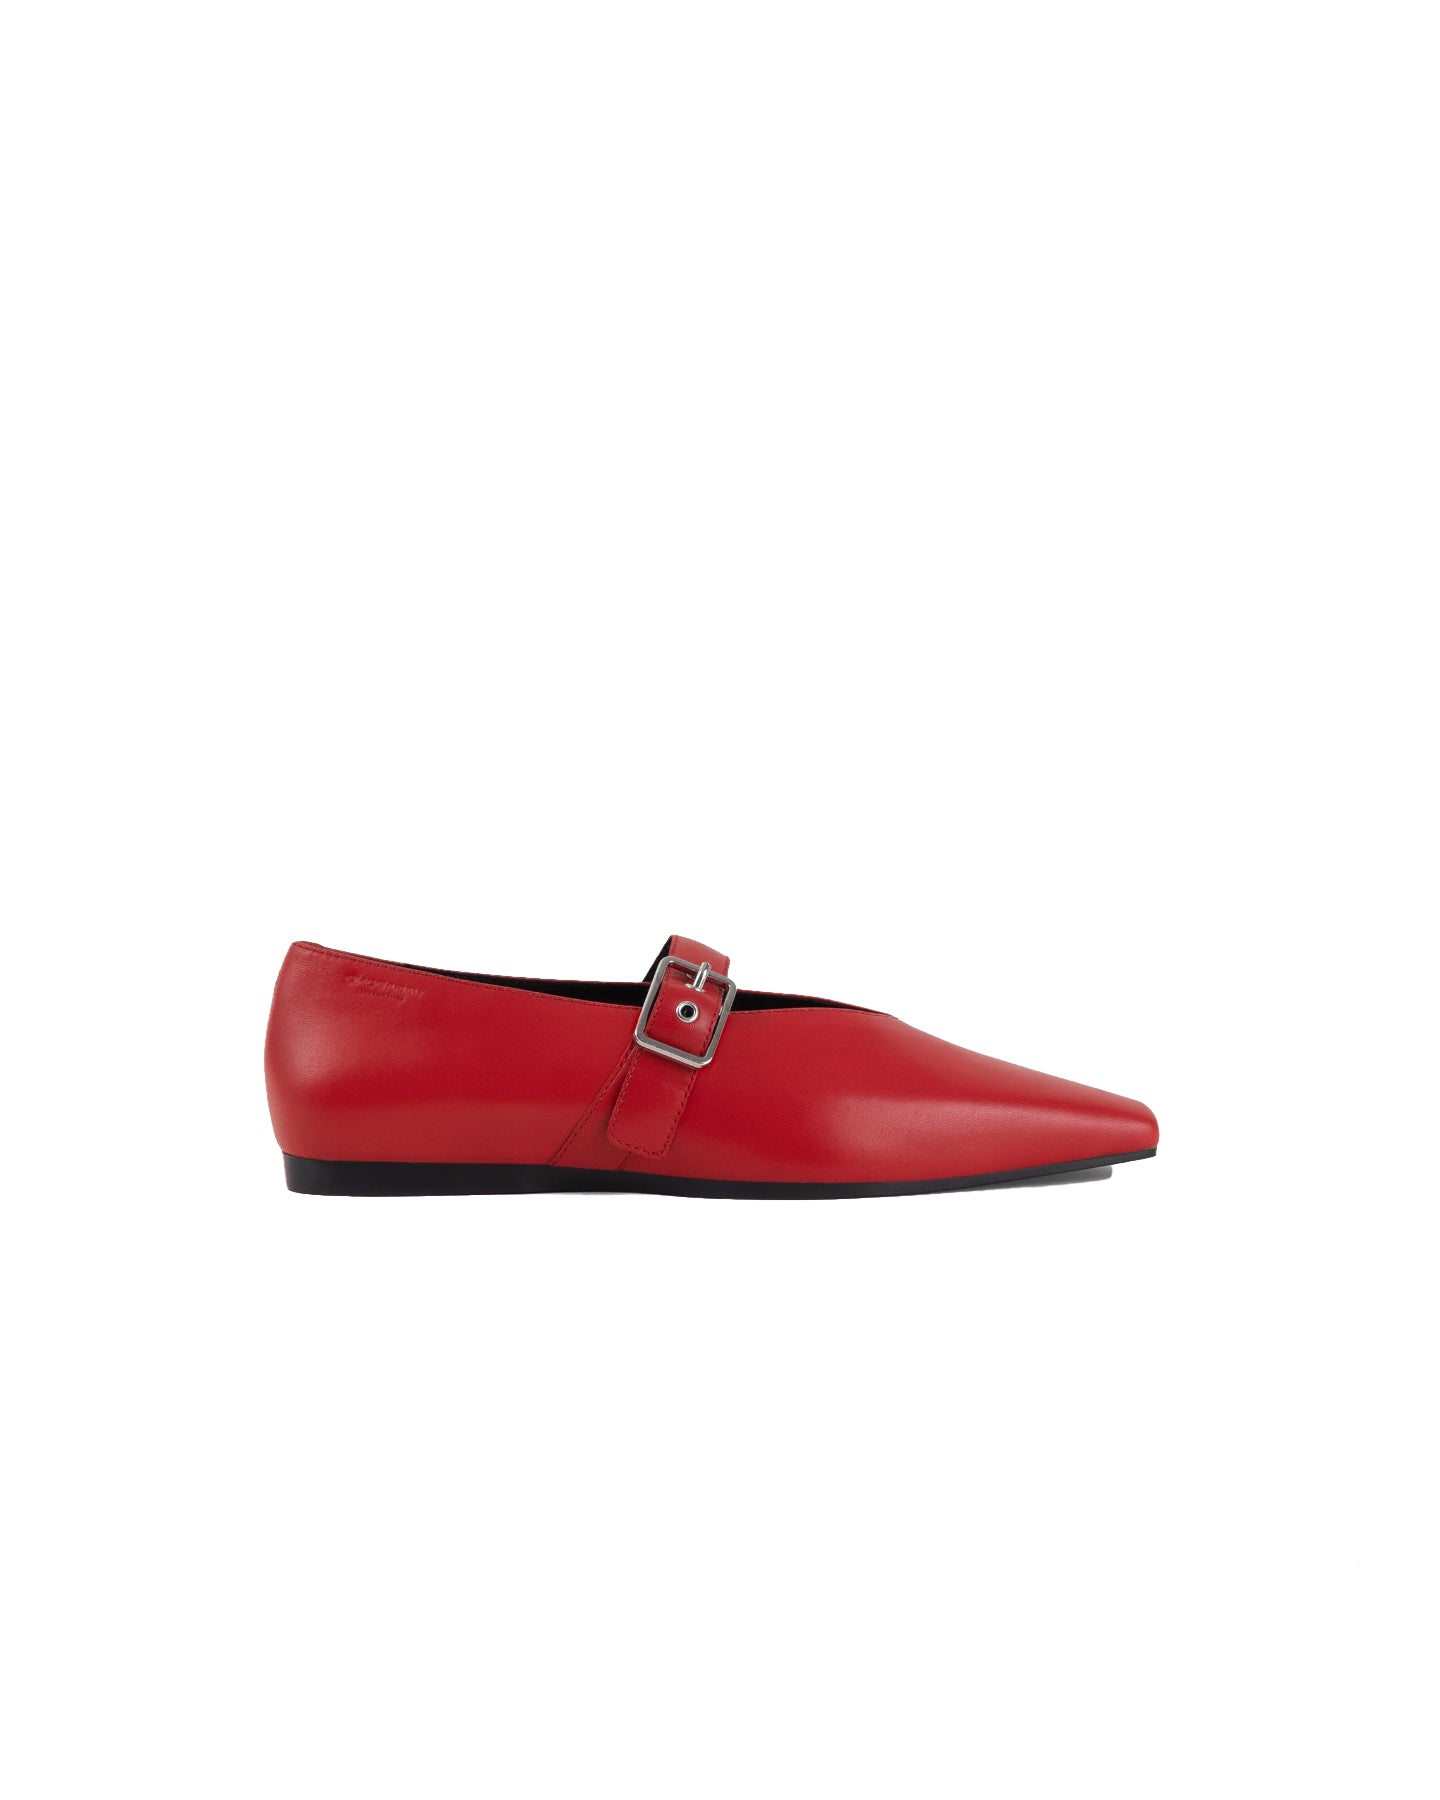 Chaussures Wioletta (5701-201-48) - Rouge